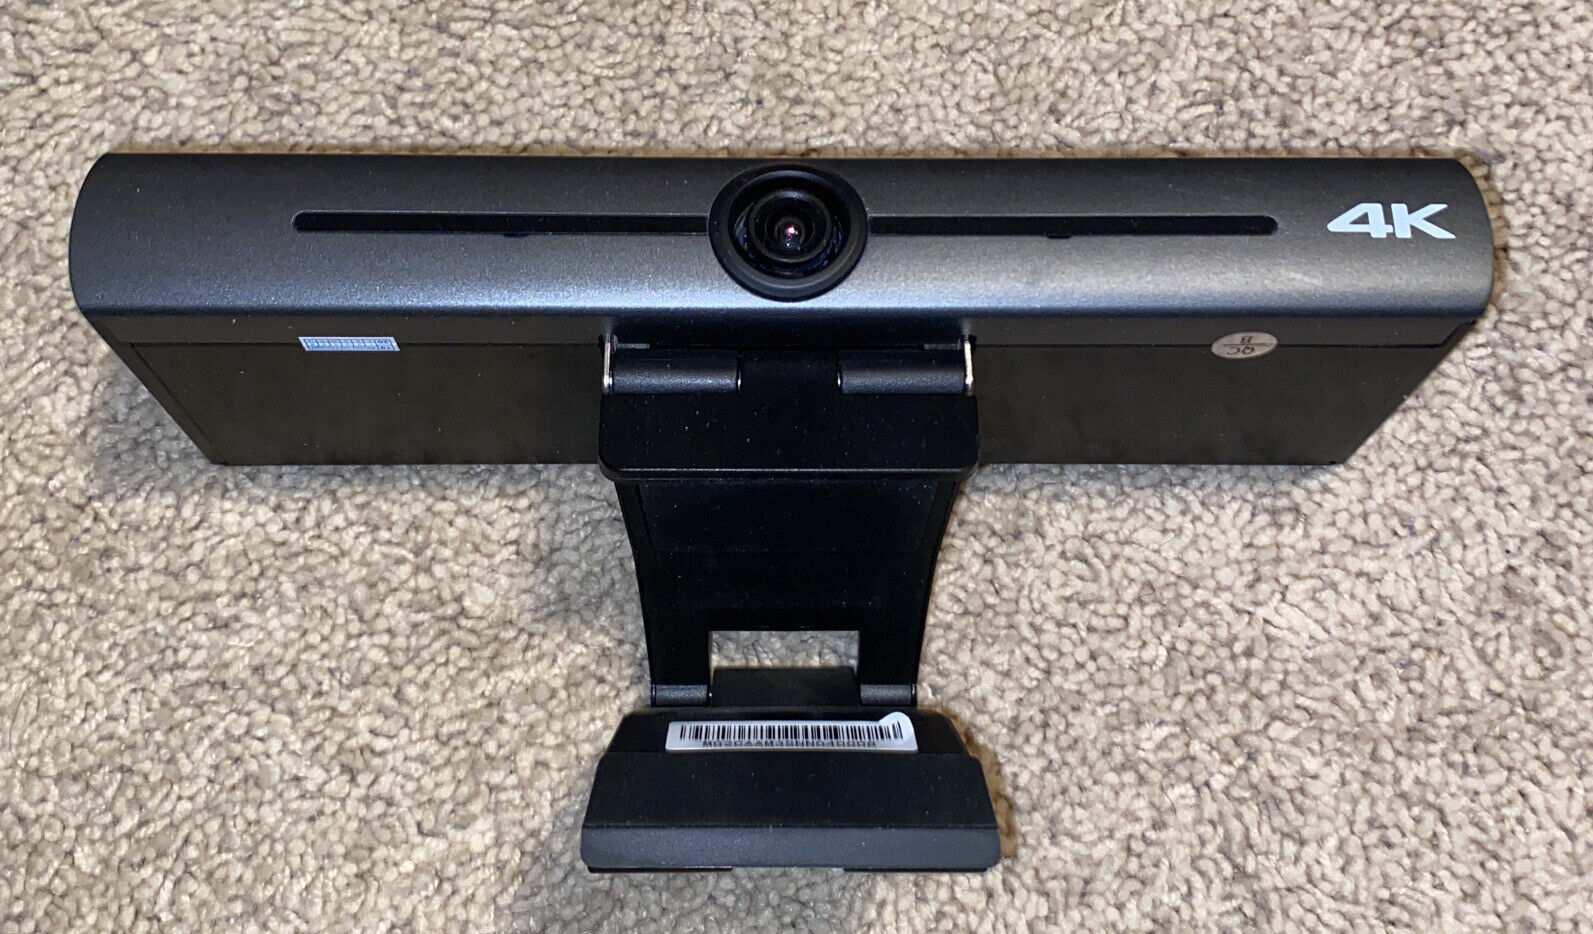 Minrray MG200C â€” AI 4K UHD Video Conference Camera - USB3.0